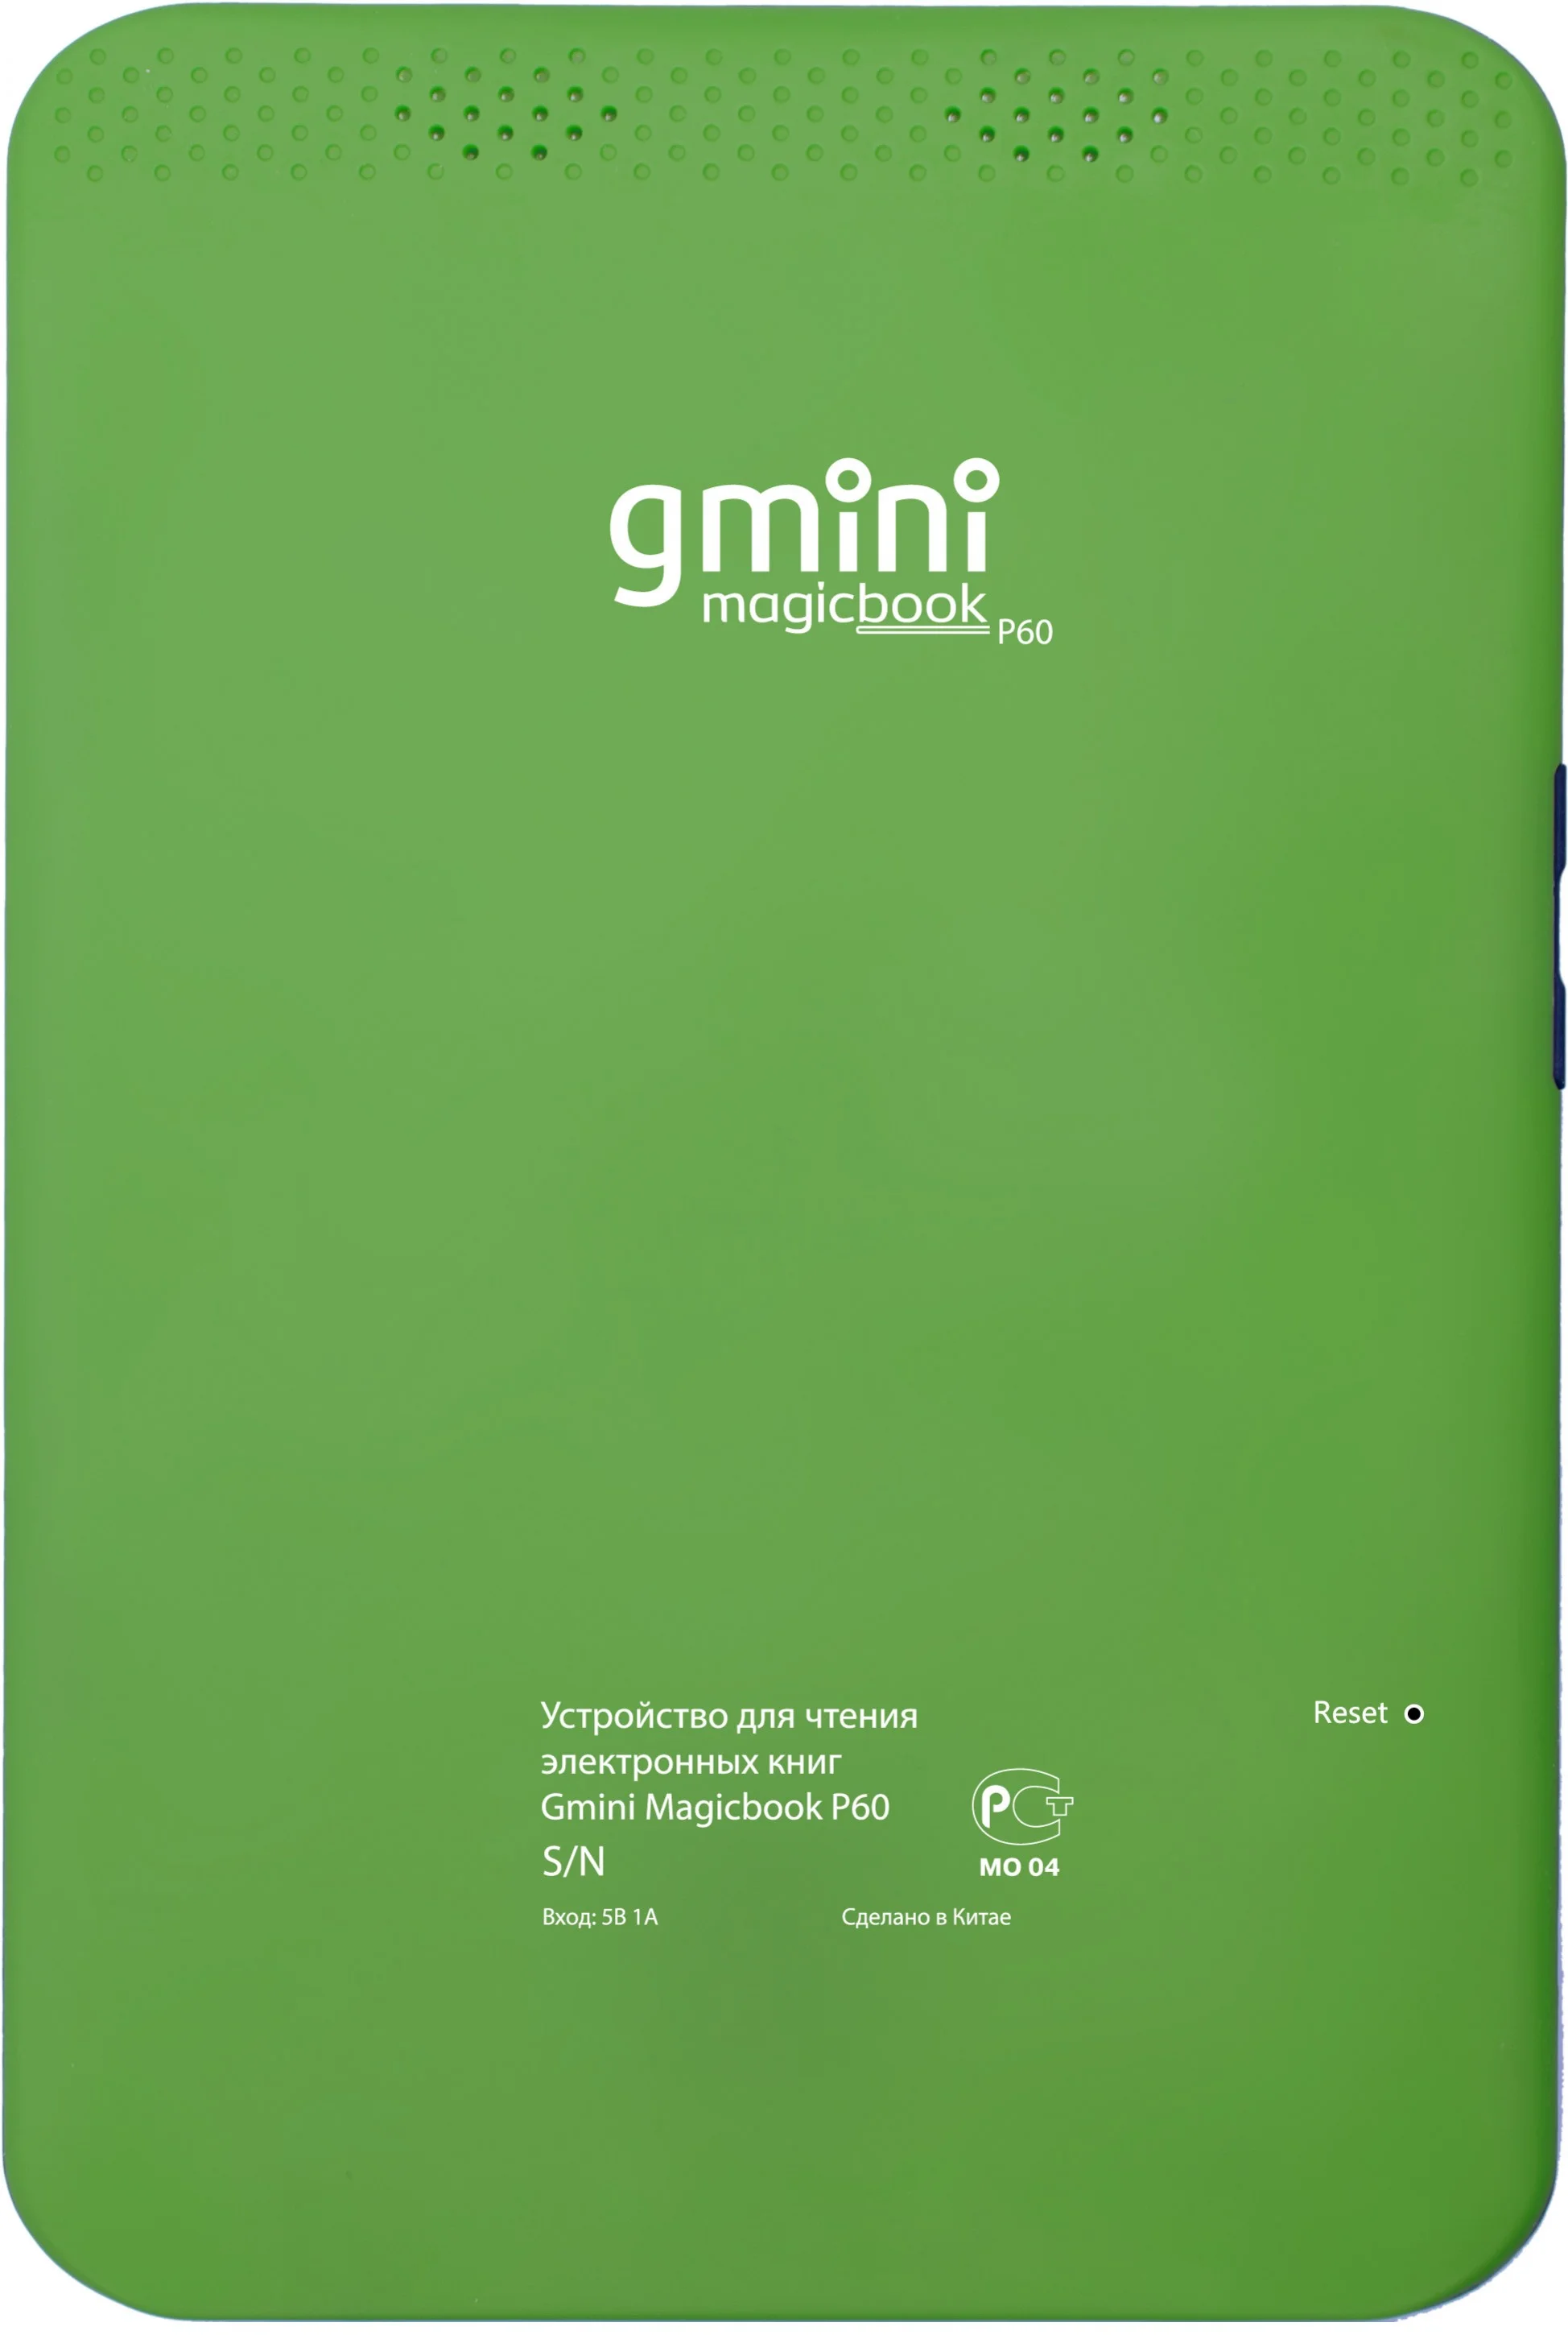 Magicbook pc manager. Gmini p60. Gmini MAGICBOOK. MAGICBOOK книга. Gmini  электроника.